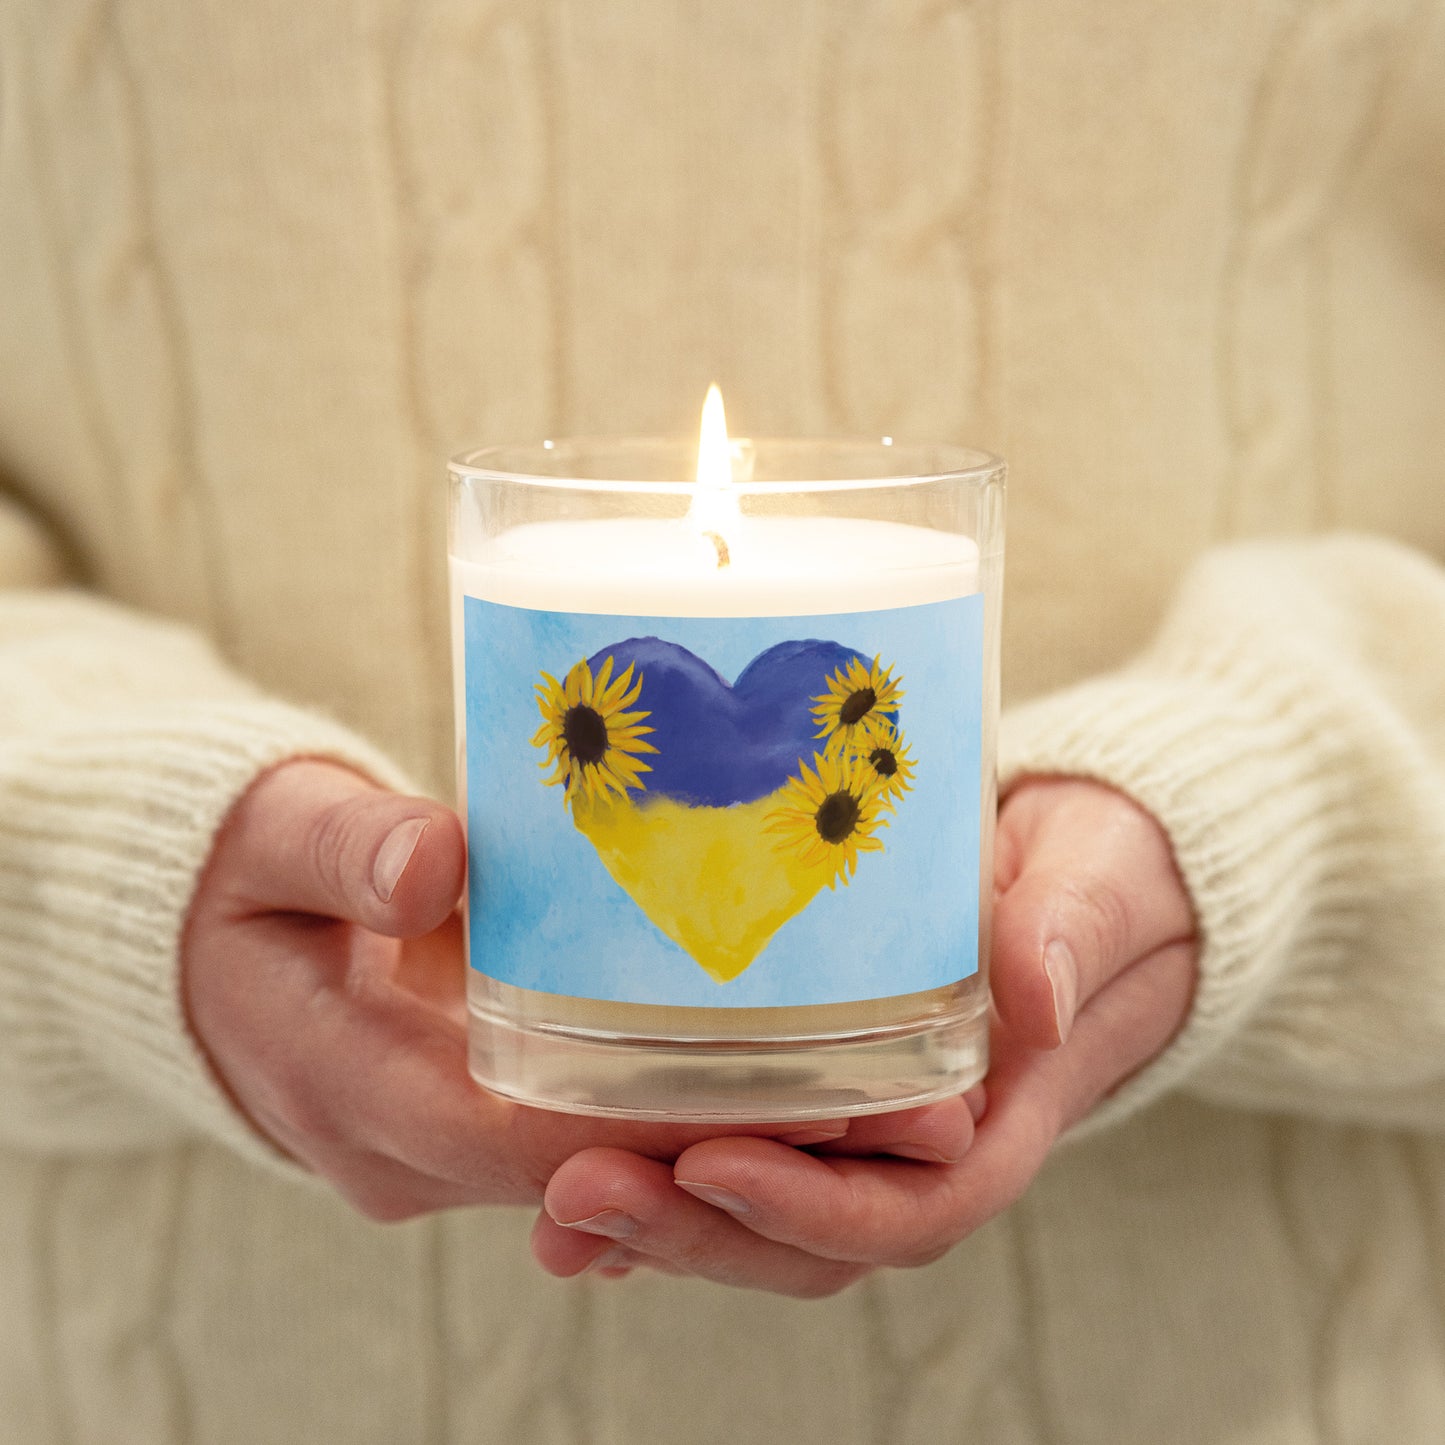 Ukraine Light of Hope Candle